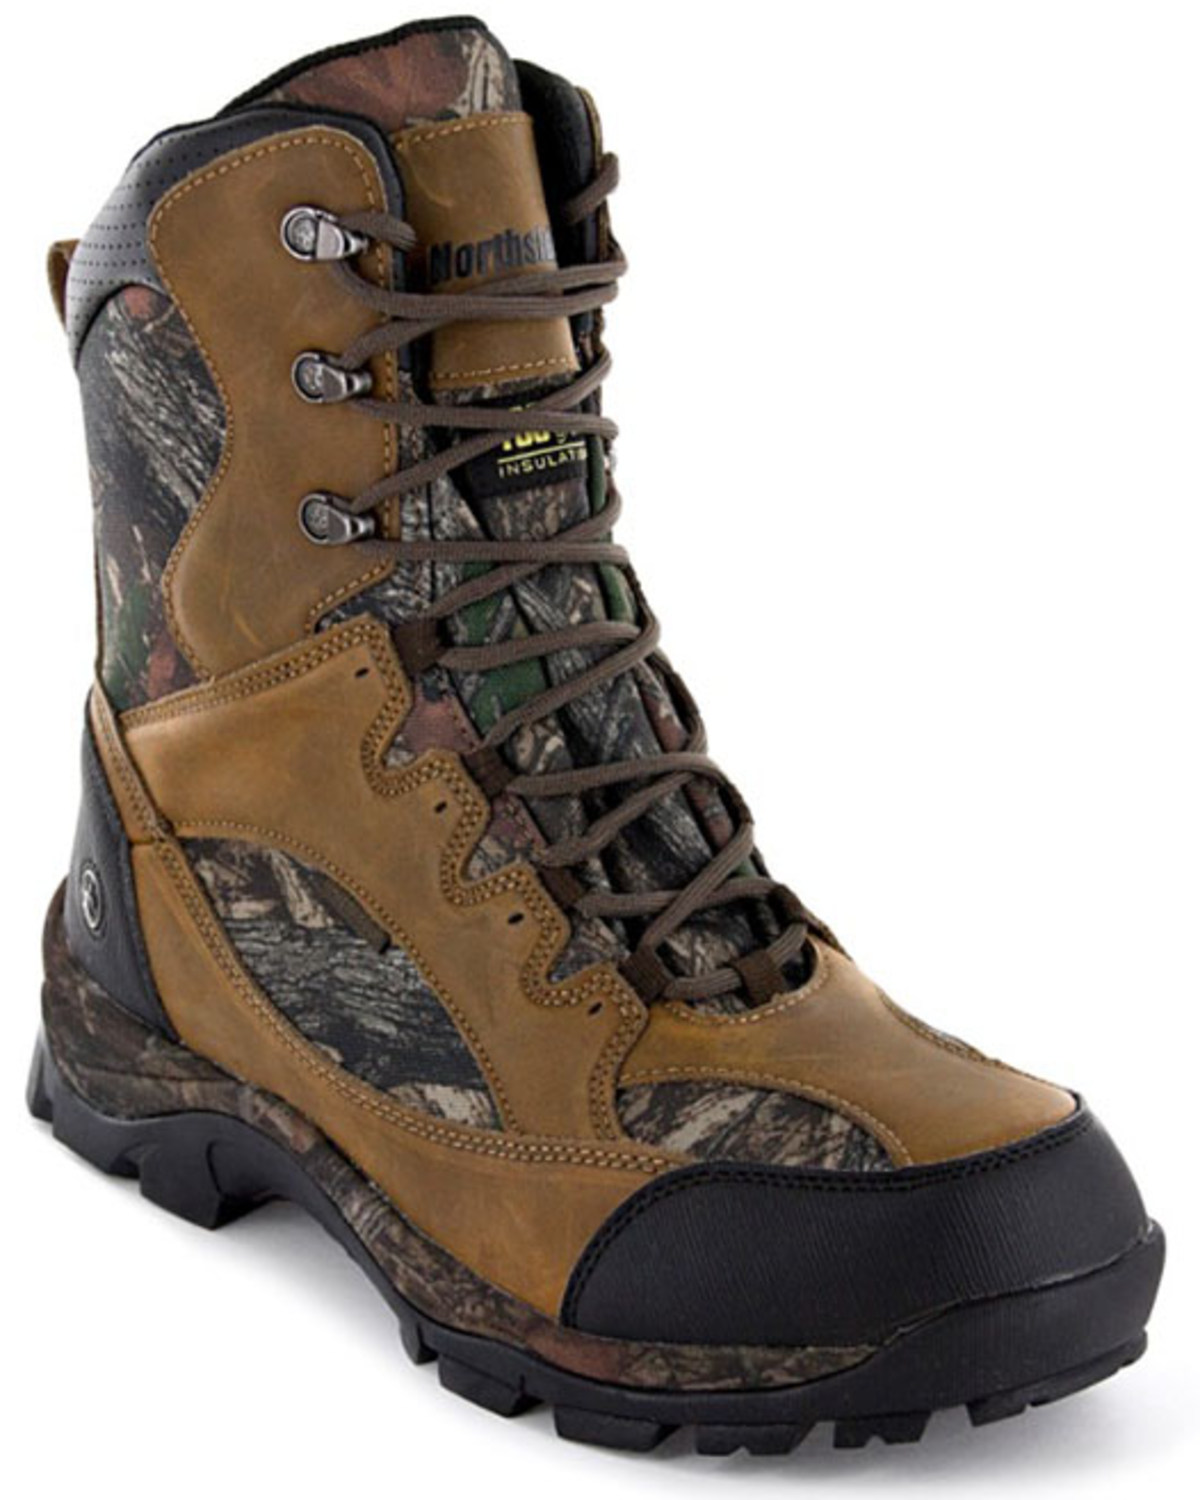 Northside Men's Renegade Waterproof Camo Hunting Boots - Soft Toe